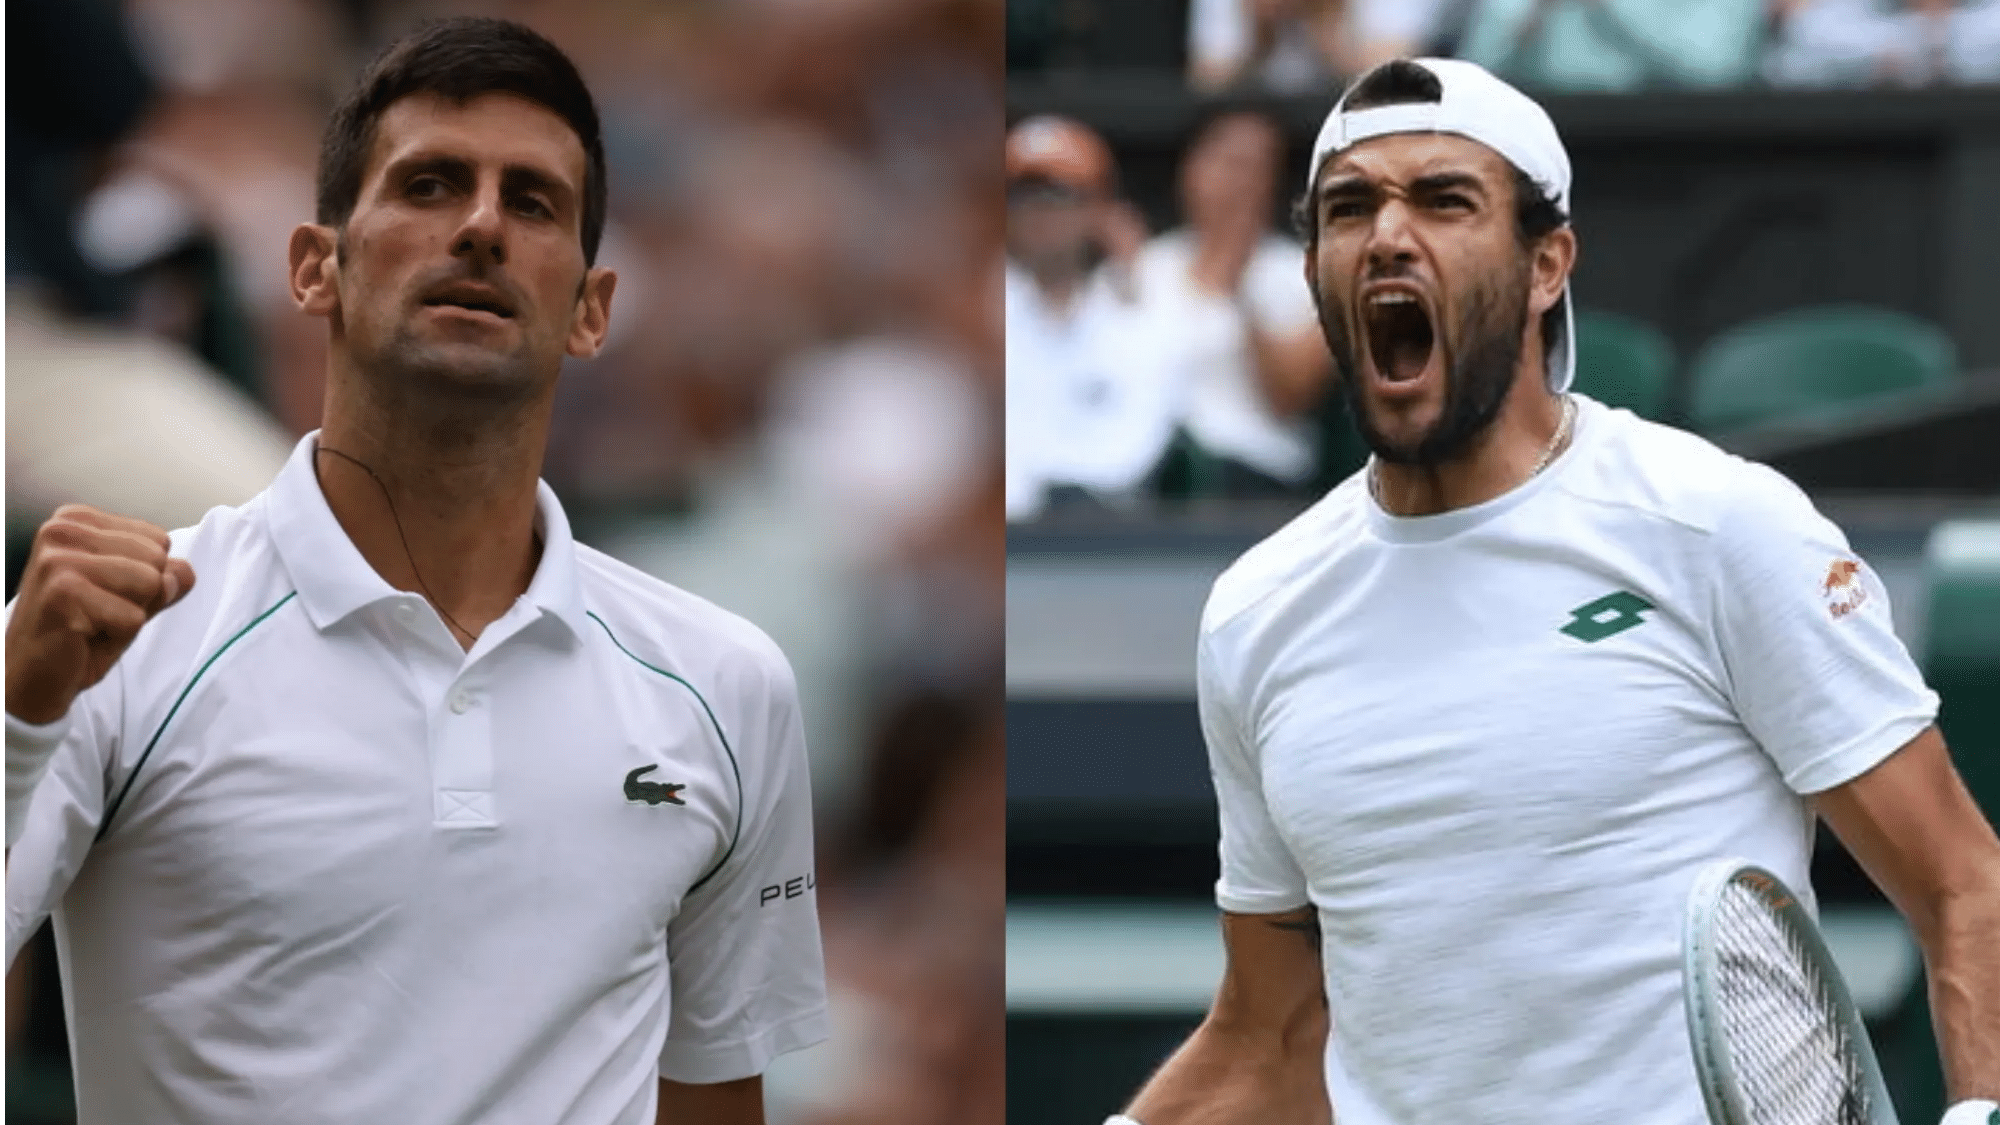 Novak Djokovic and Matteo Berrettini’s paths to the Wimbledon final